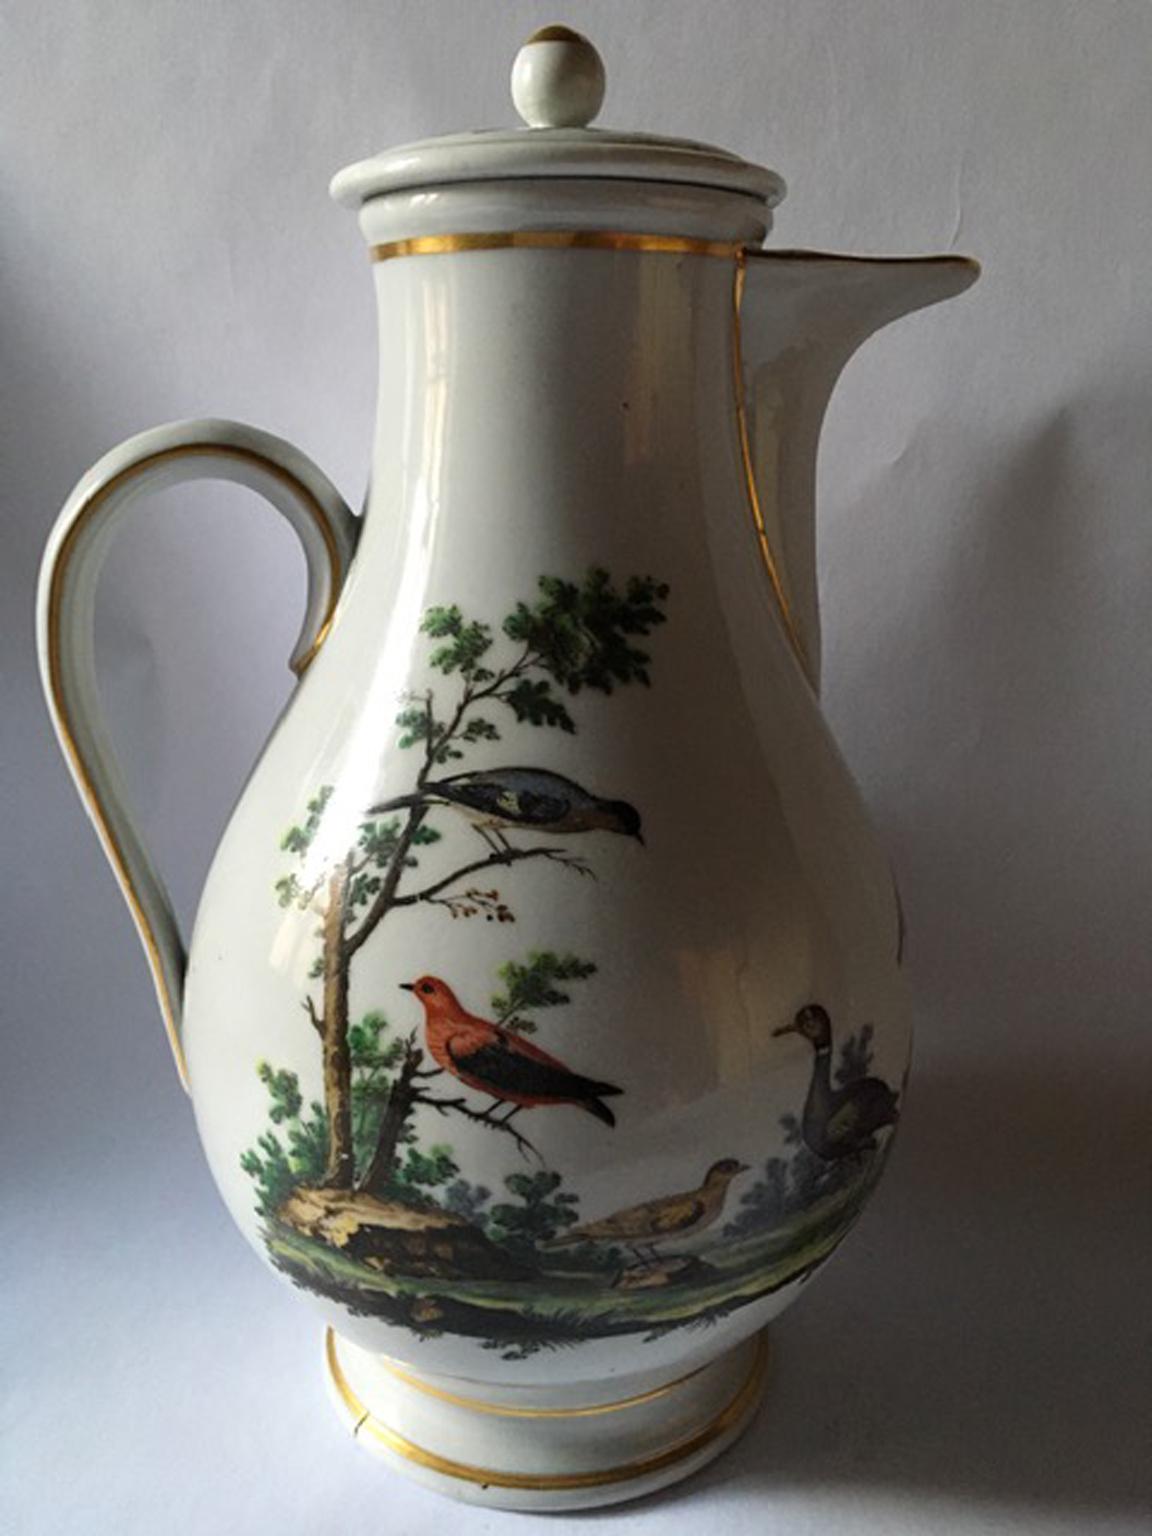 Italy Richard Ginori Mid-18th Century Porcelain Coffee Pot For Sale 4